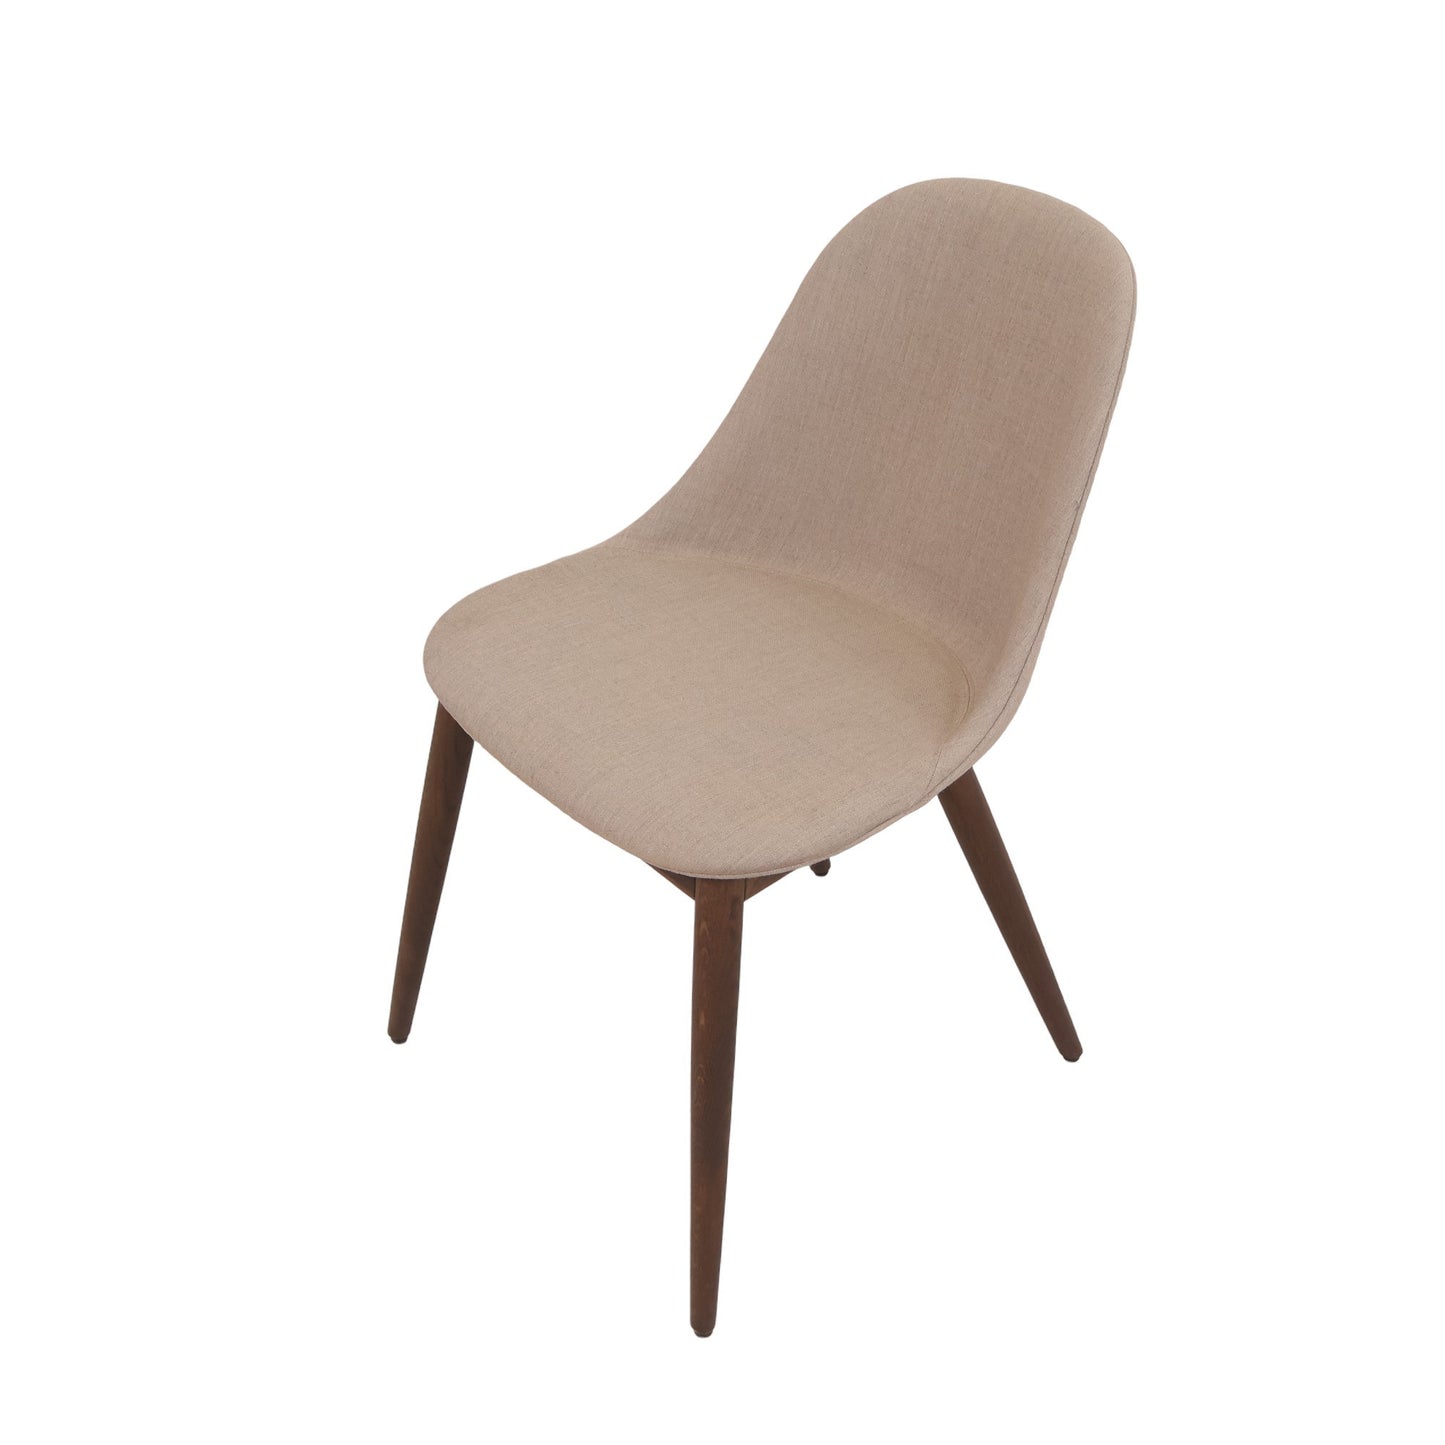 MENU Harbour Side Dining Chair, Wooden Base, upholstered